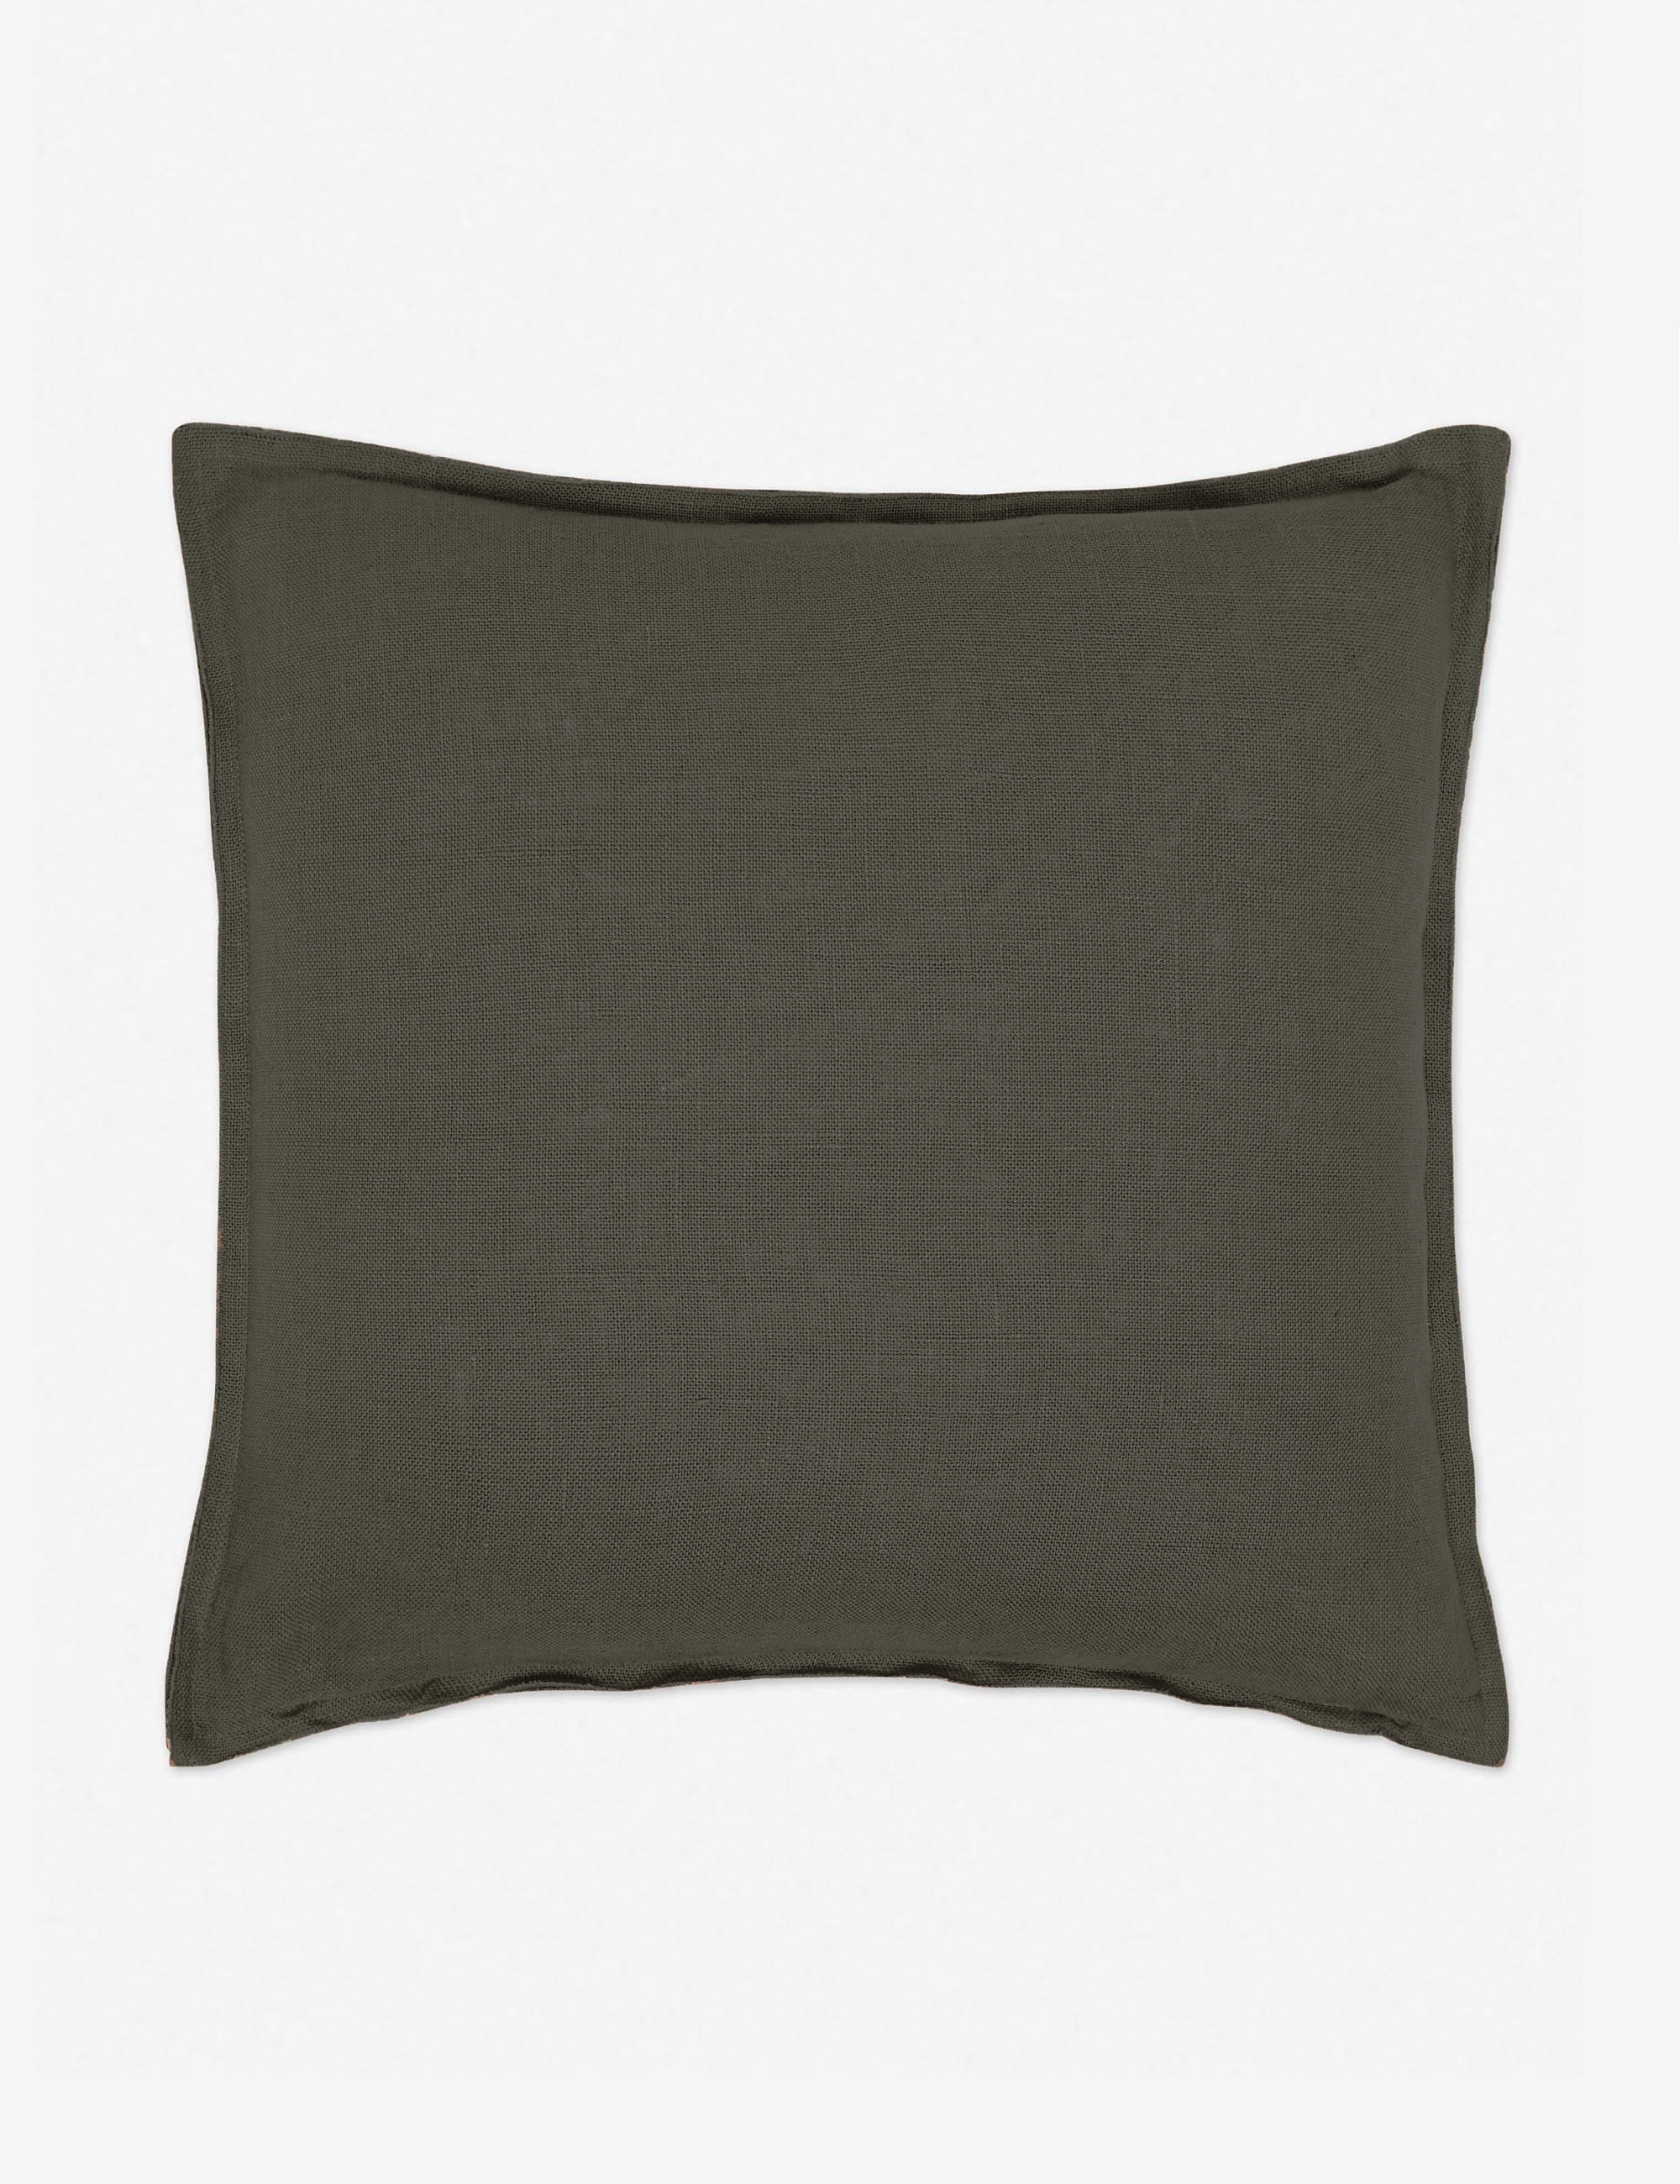 Arlo Linen Pillow, Conifer - Image 2